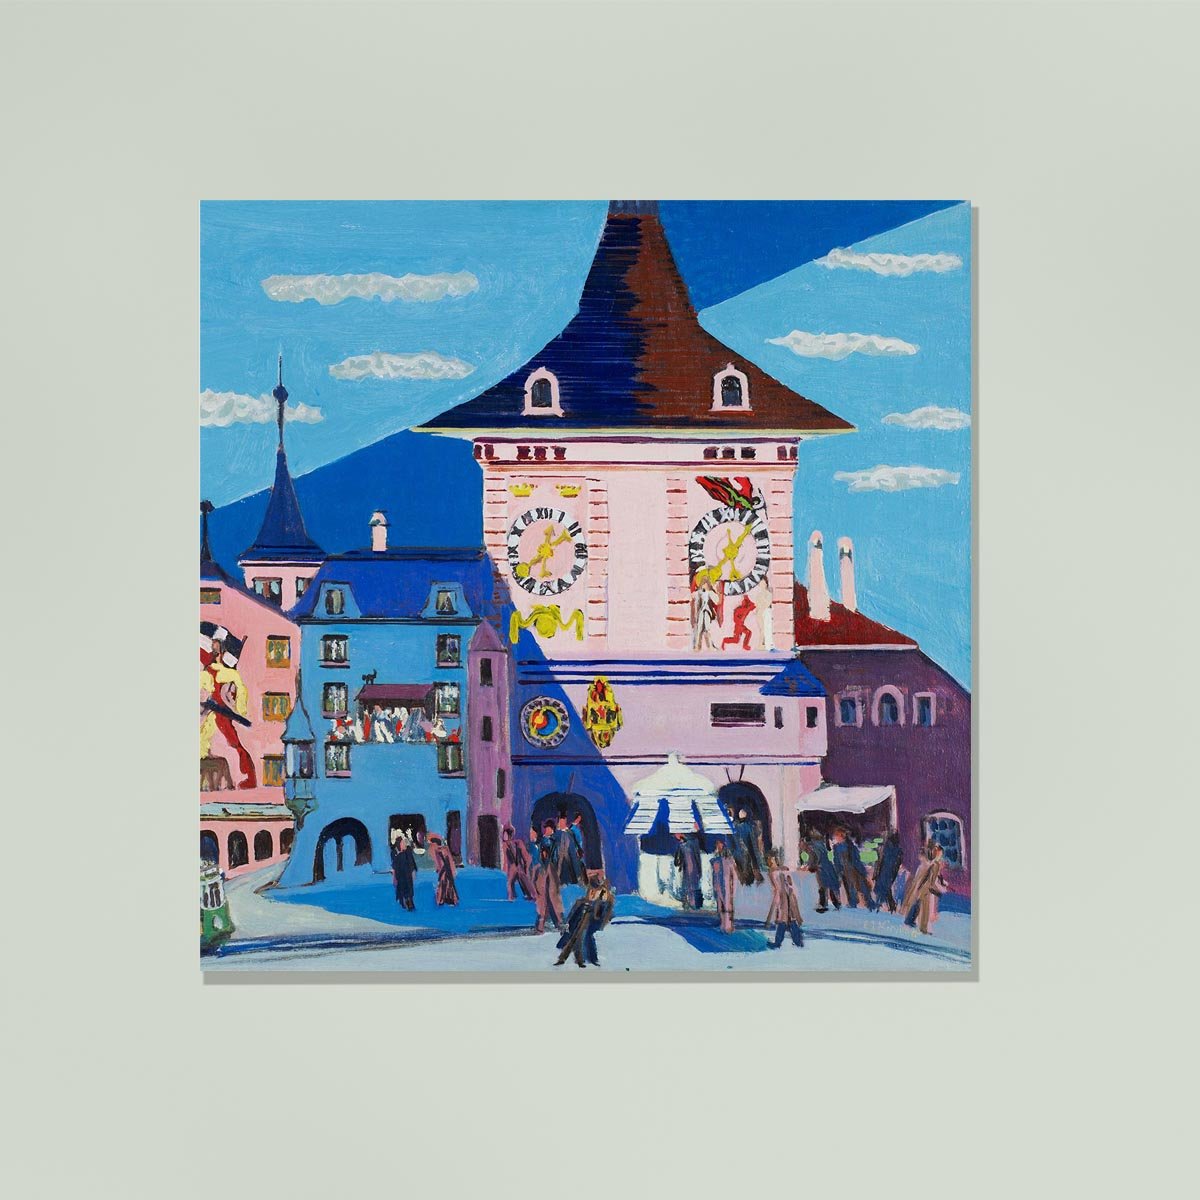 Bern with Belltower by Ernst Kirchner